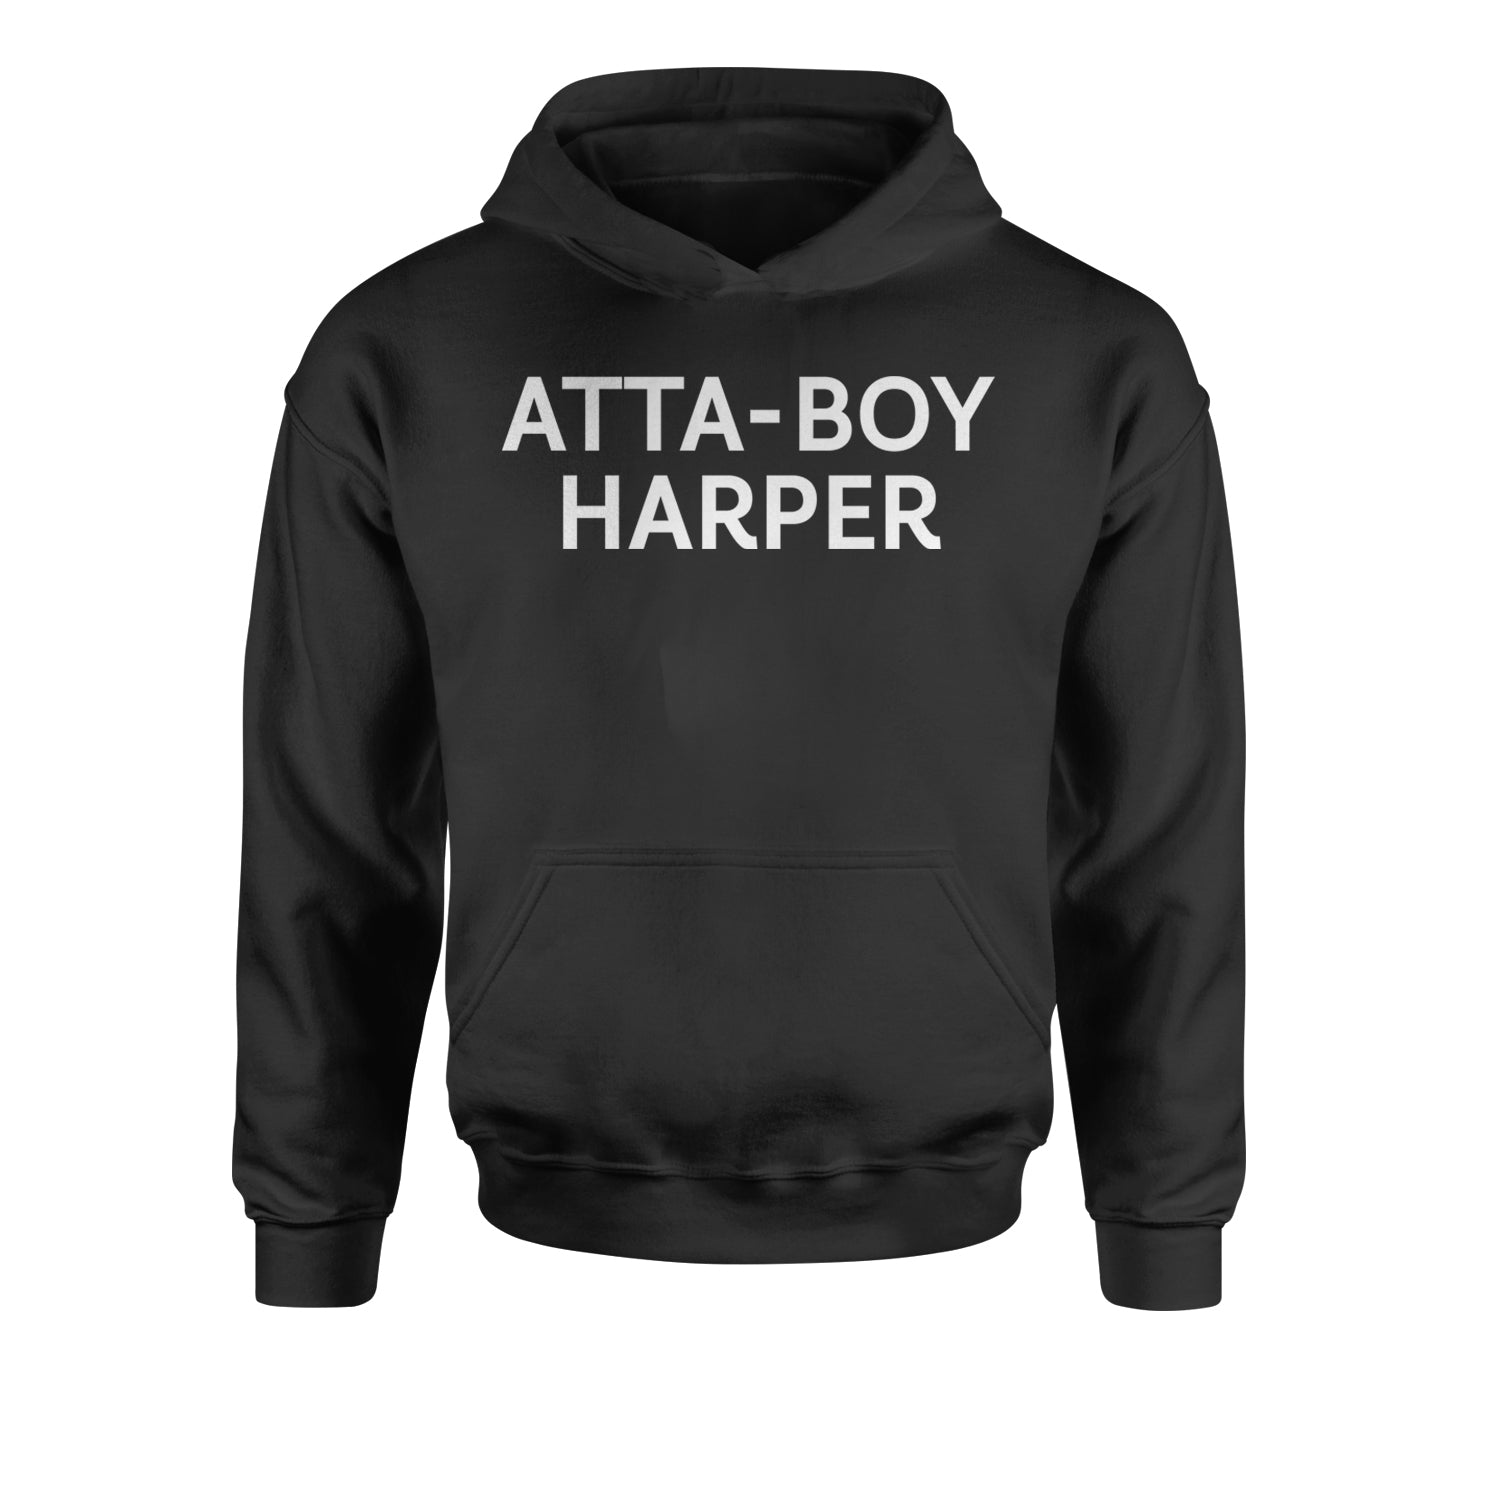 Atta-Boy Harper Philadelphia Youth-Sized Hoodie